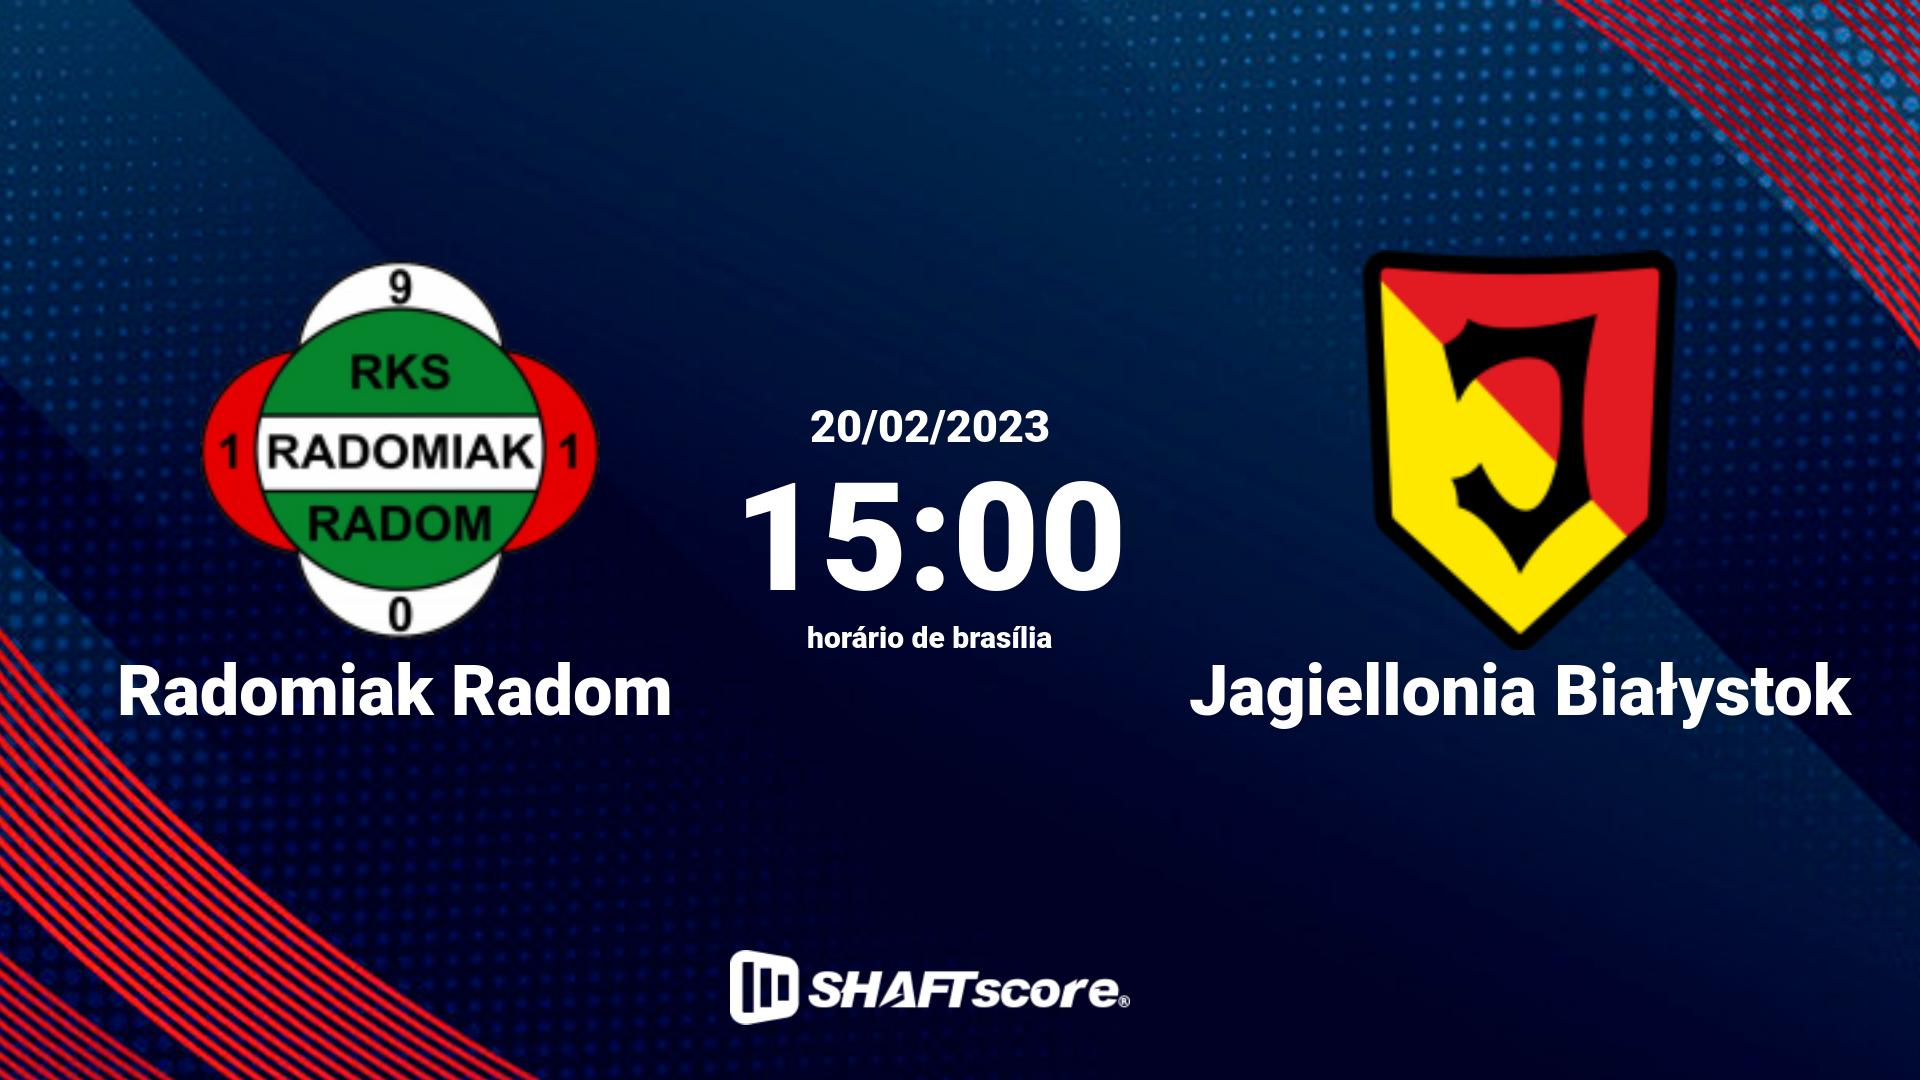 Estatísticas do jogo Radomiak Radom vs Jagiellonia Białystok 20.02 15:00